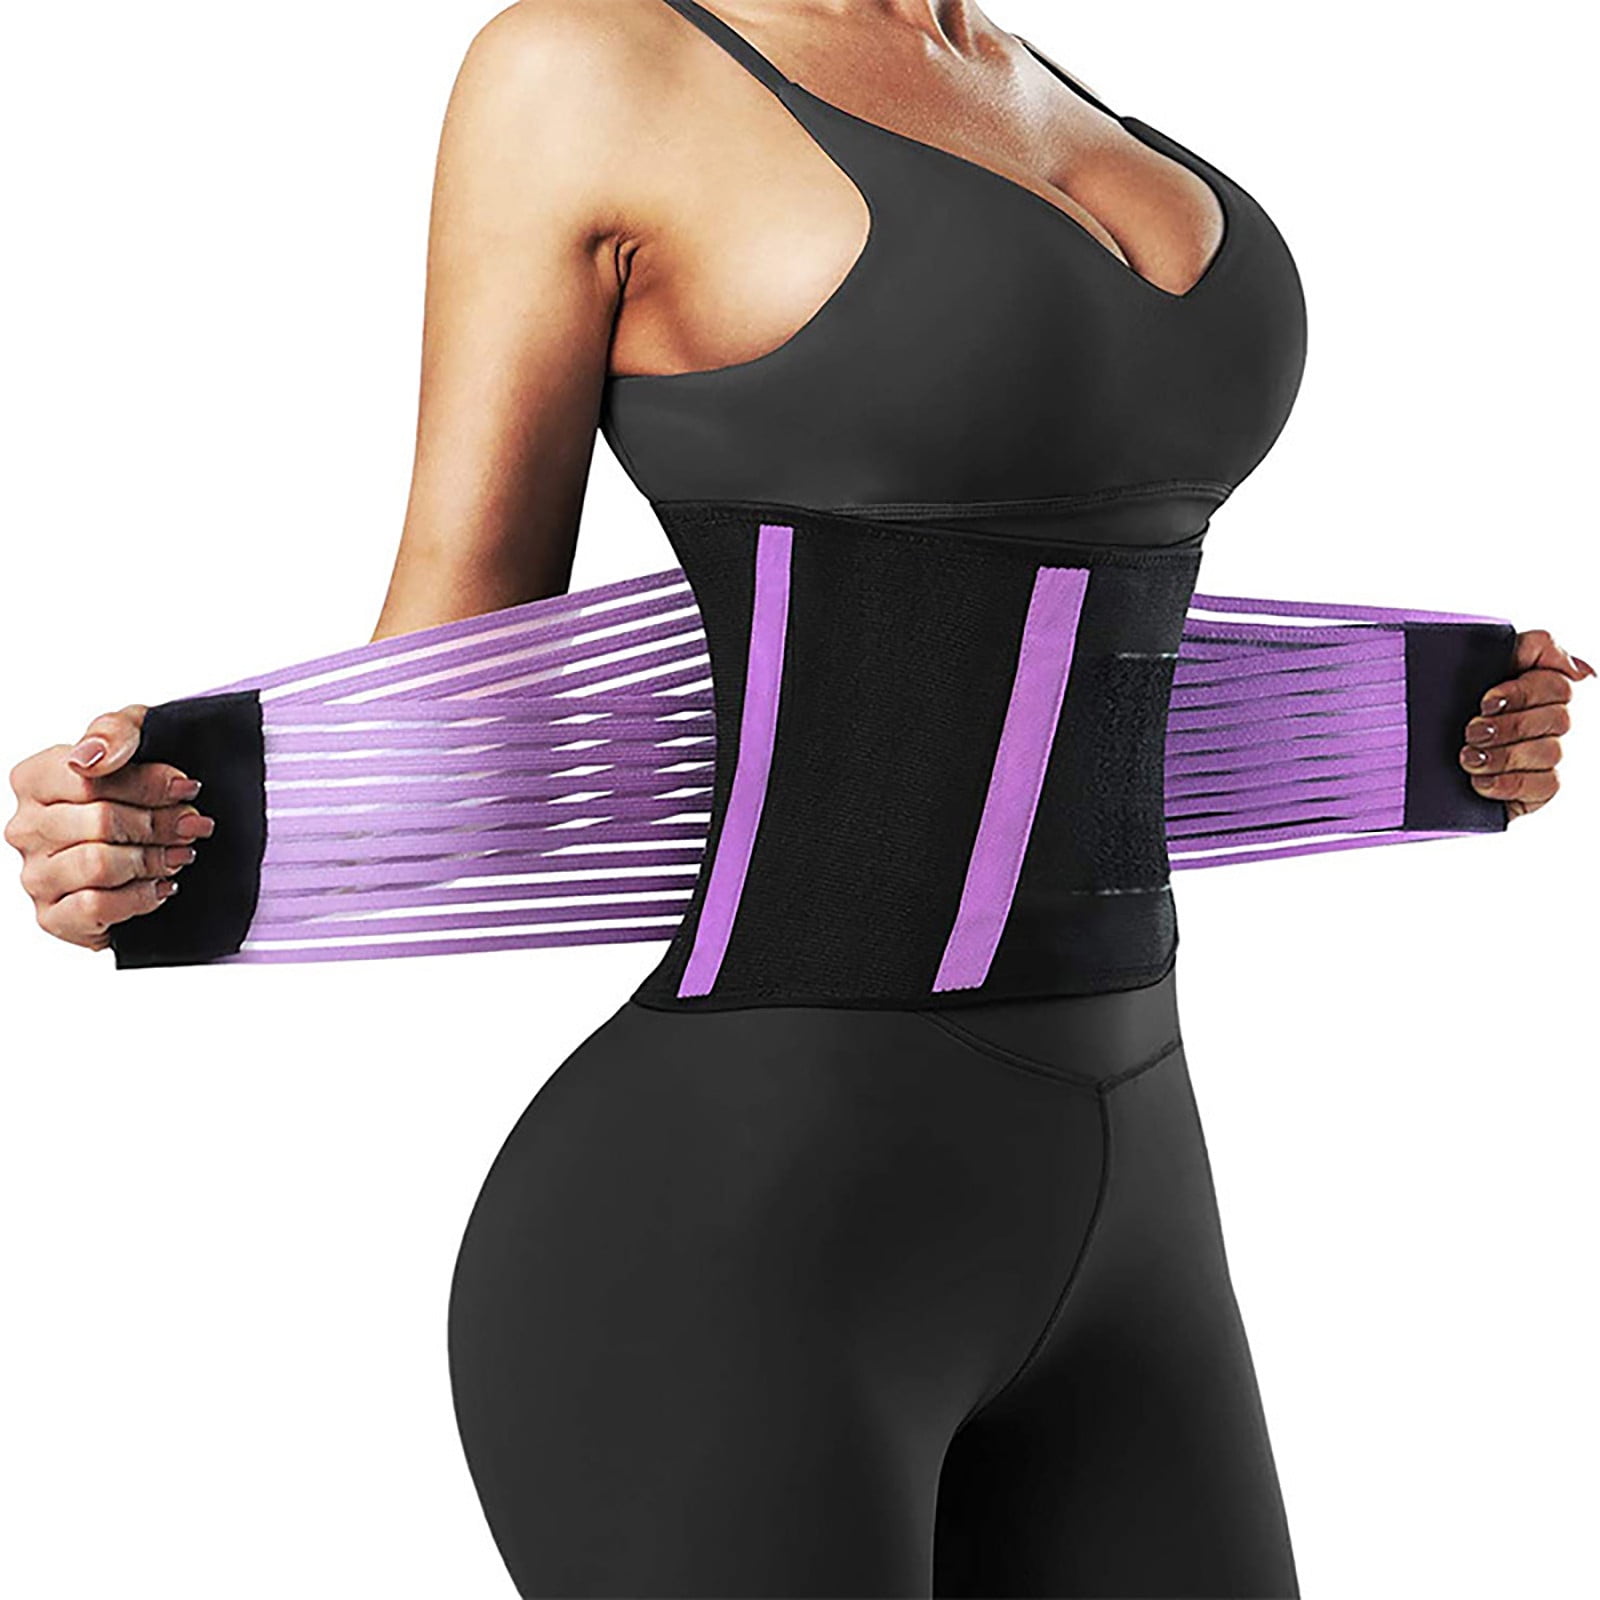 Ladies Neoprene Hot Body Waist Slimming Sweat Yoga Belt Thermal Trainer Belt B2 